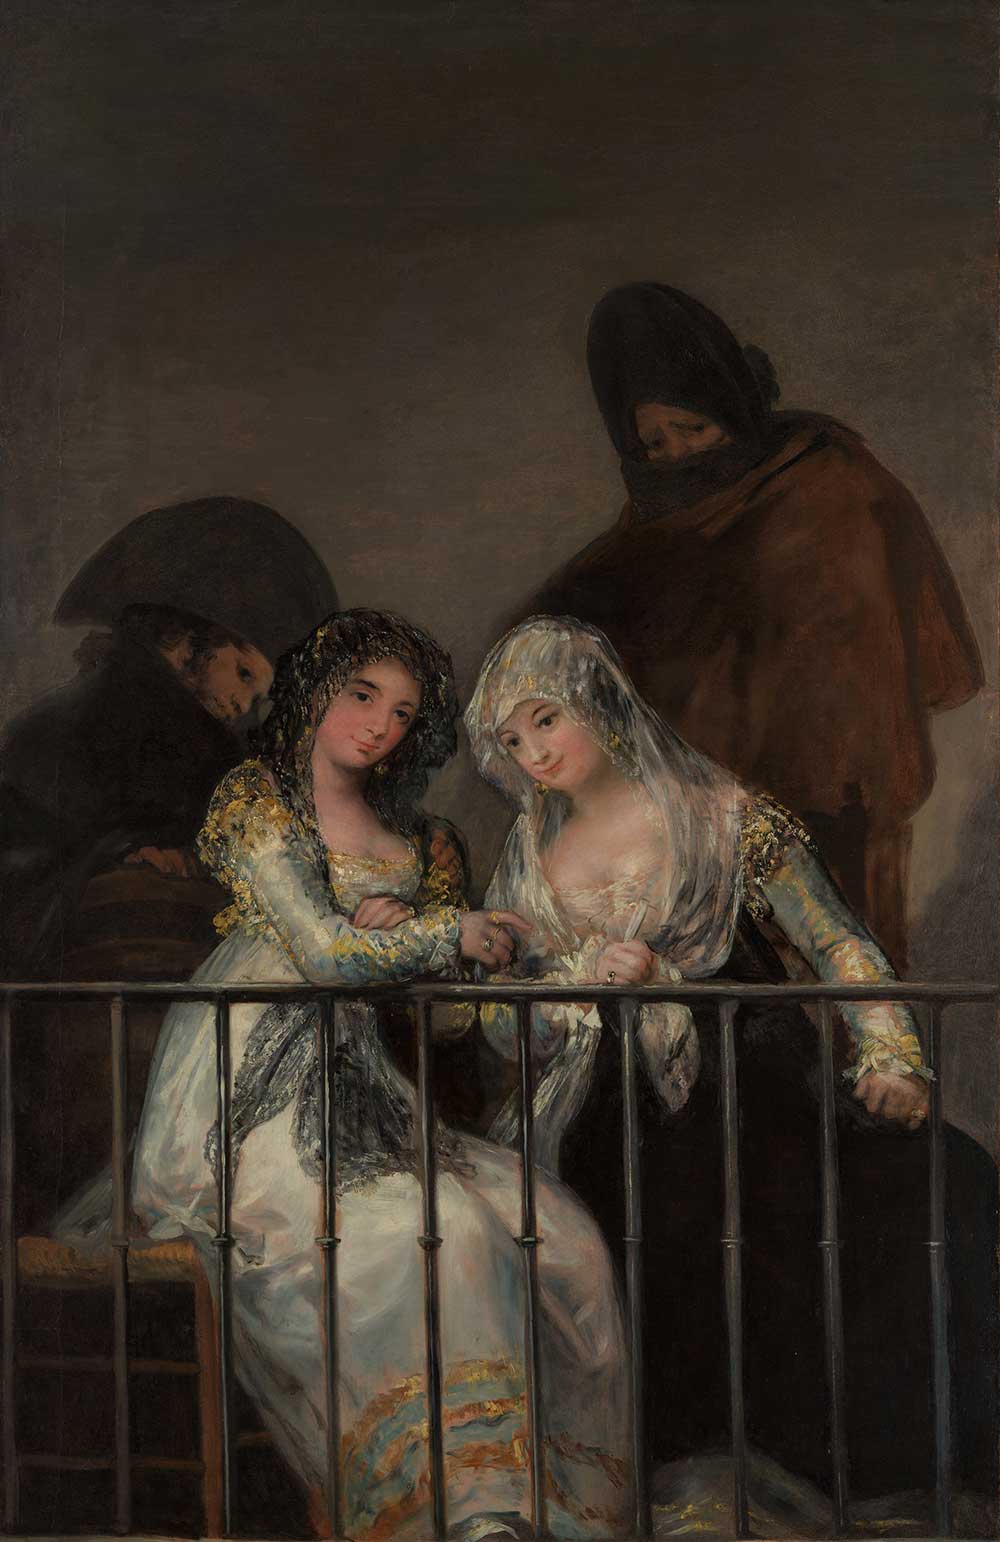 Majas on a Balcony, attributed to Francisco Goya, c. 1805.